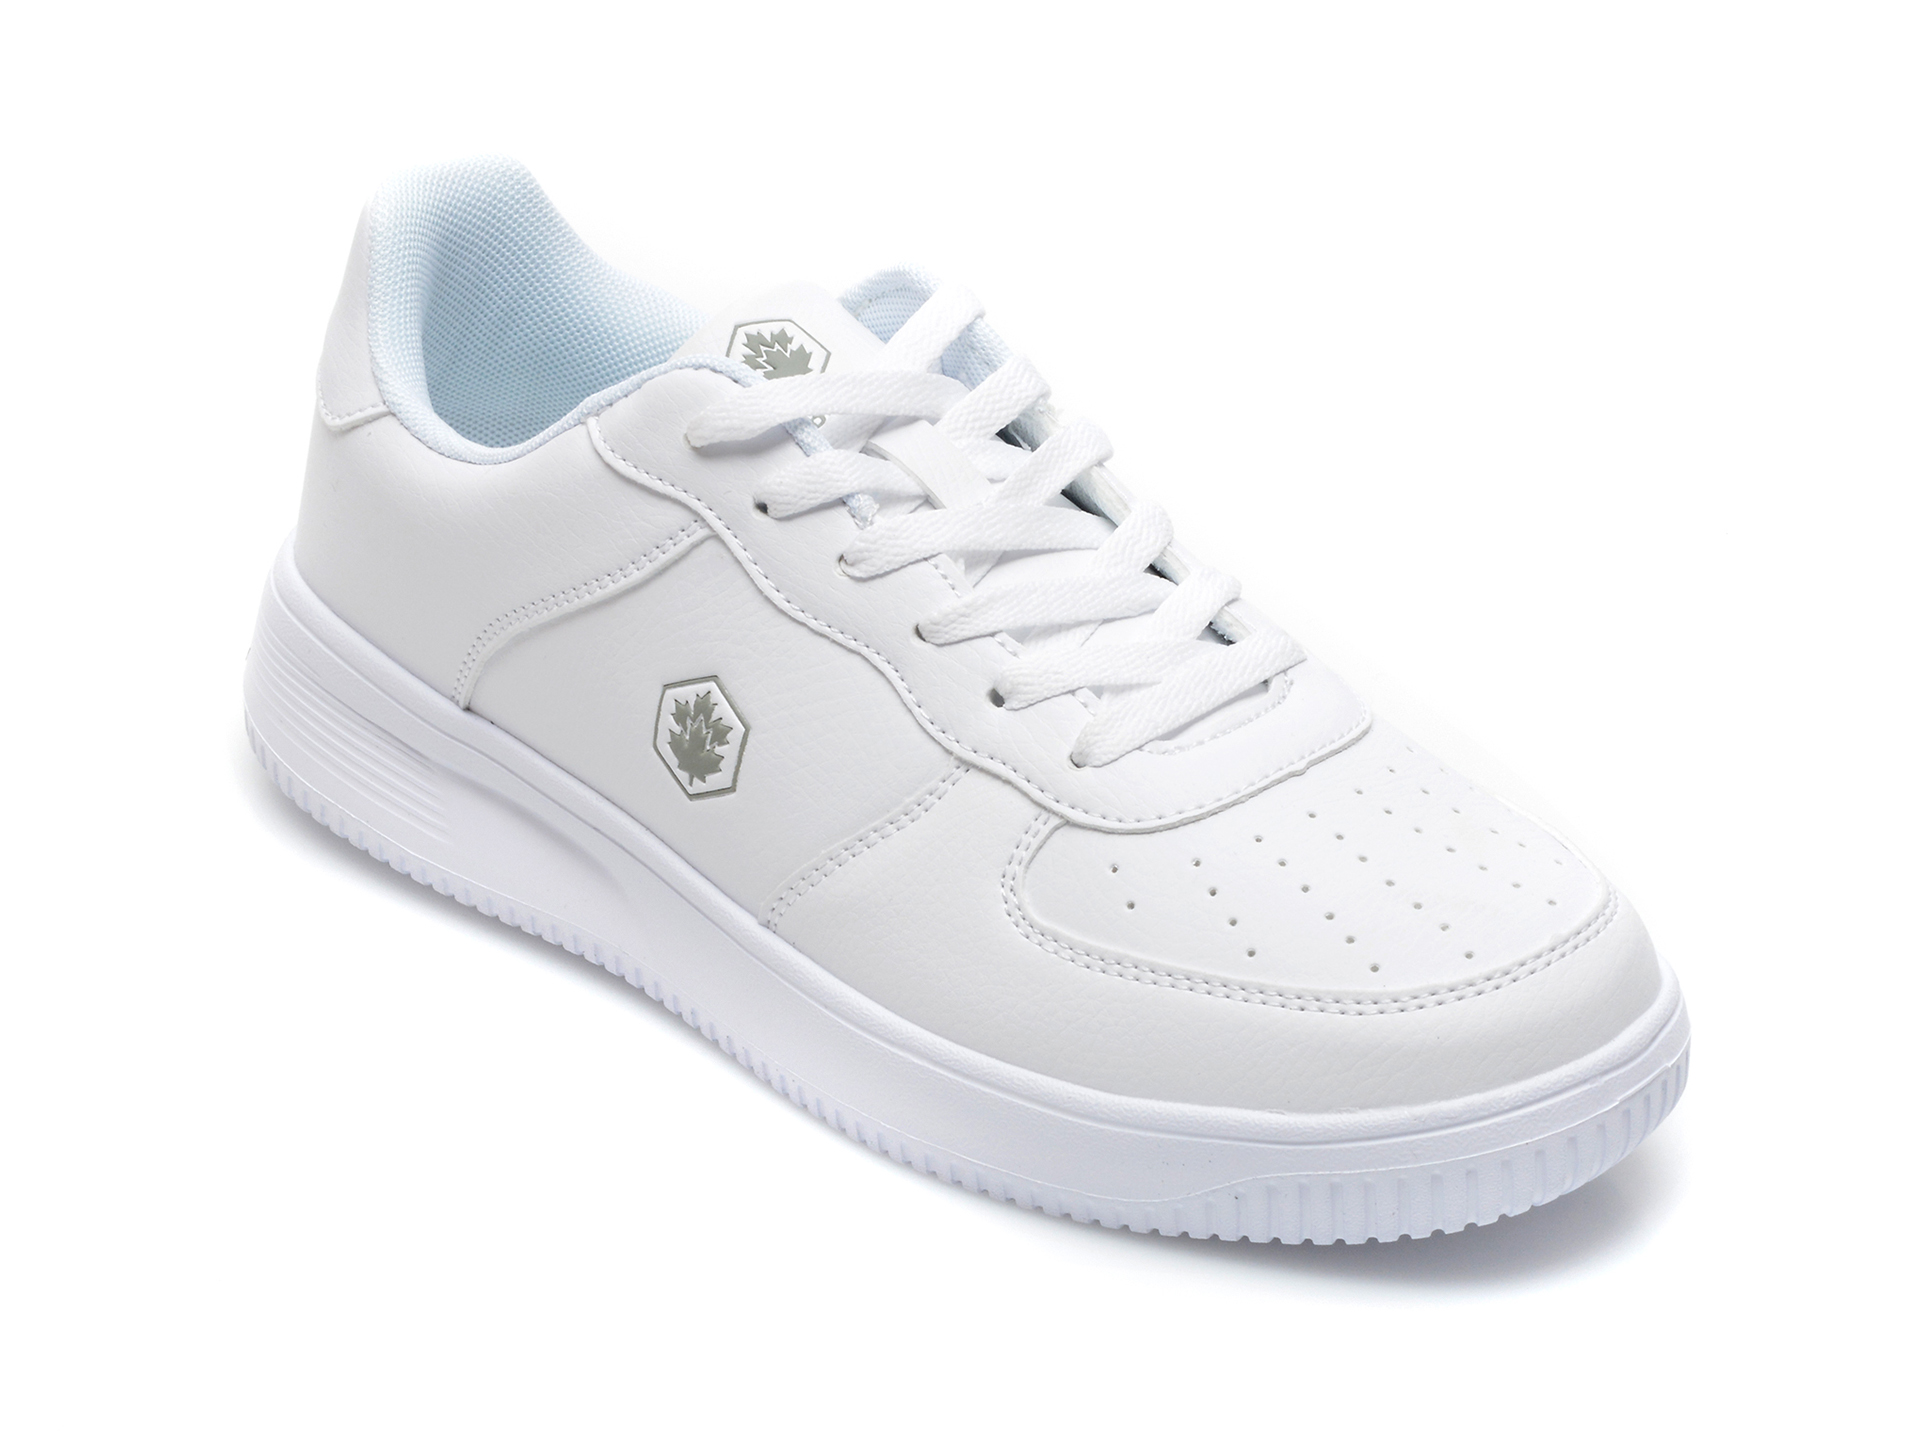 Pantofi sport LUMBERJACK albi, 7041001, din oiele ecologica imagine Black Friday 2021